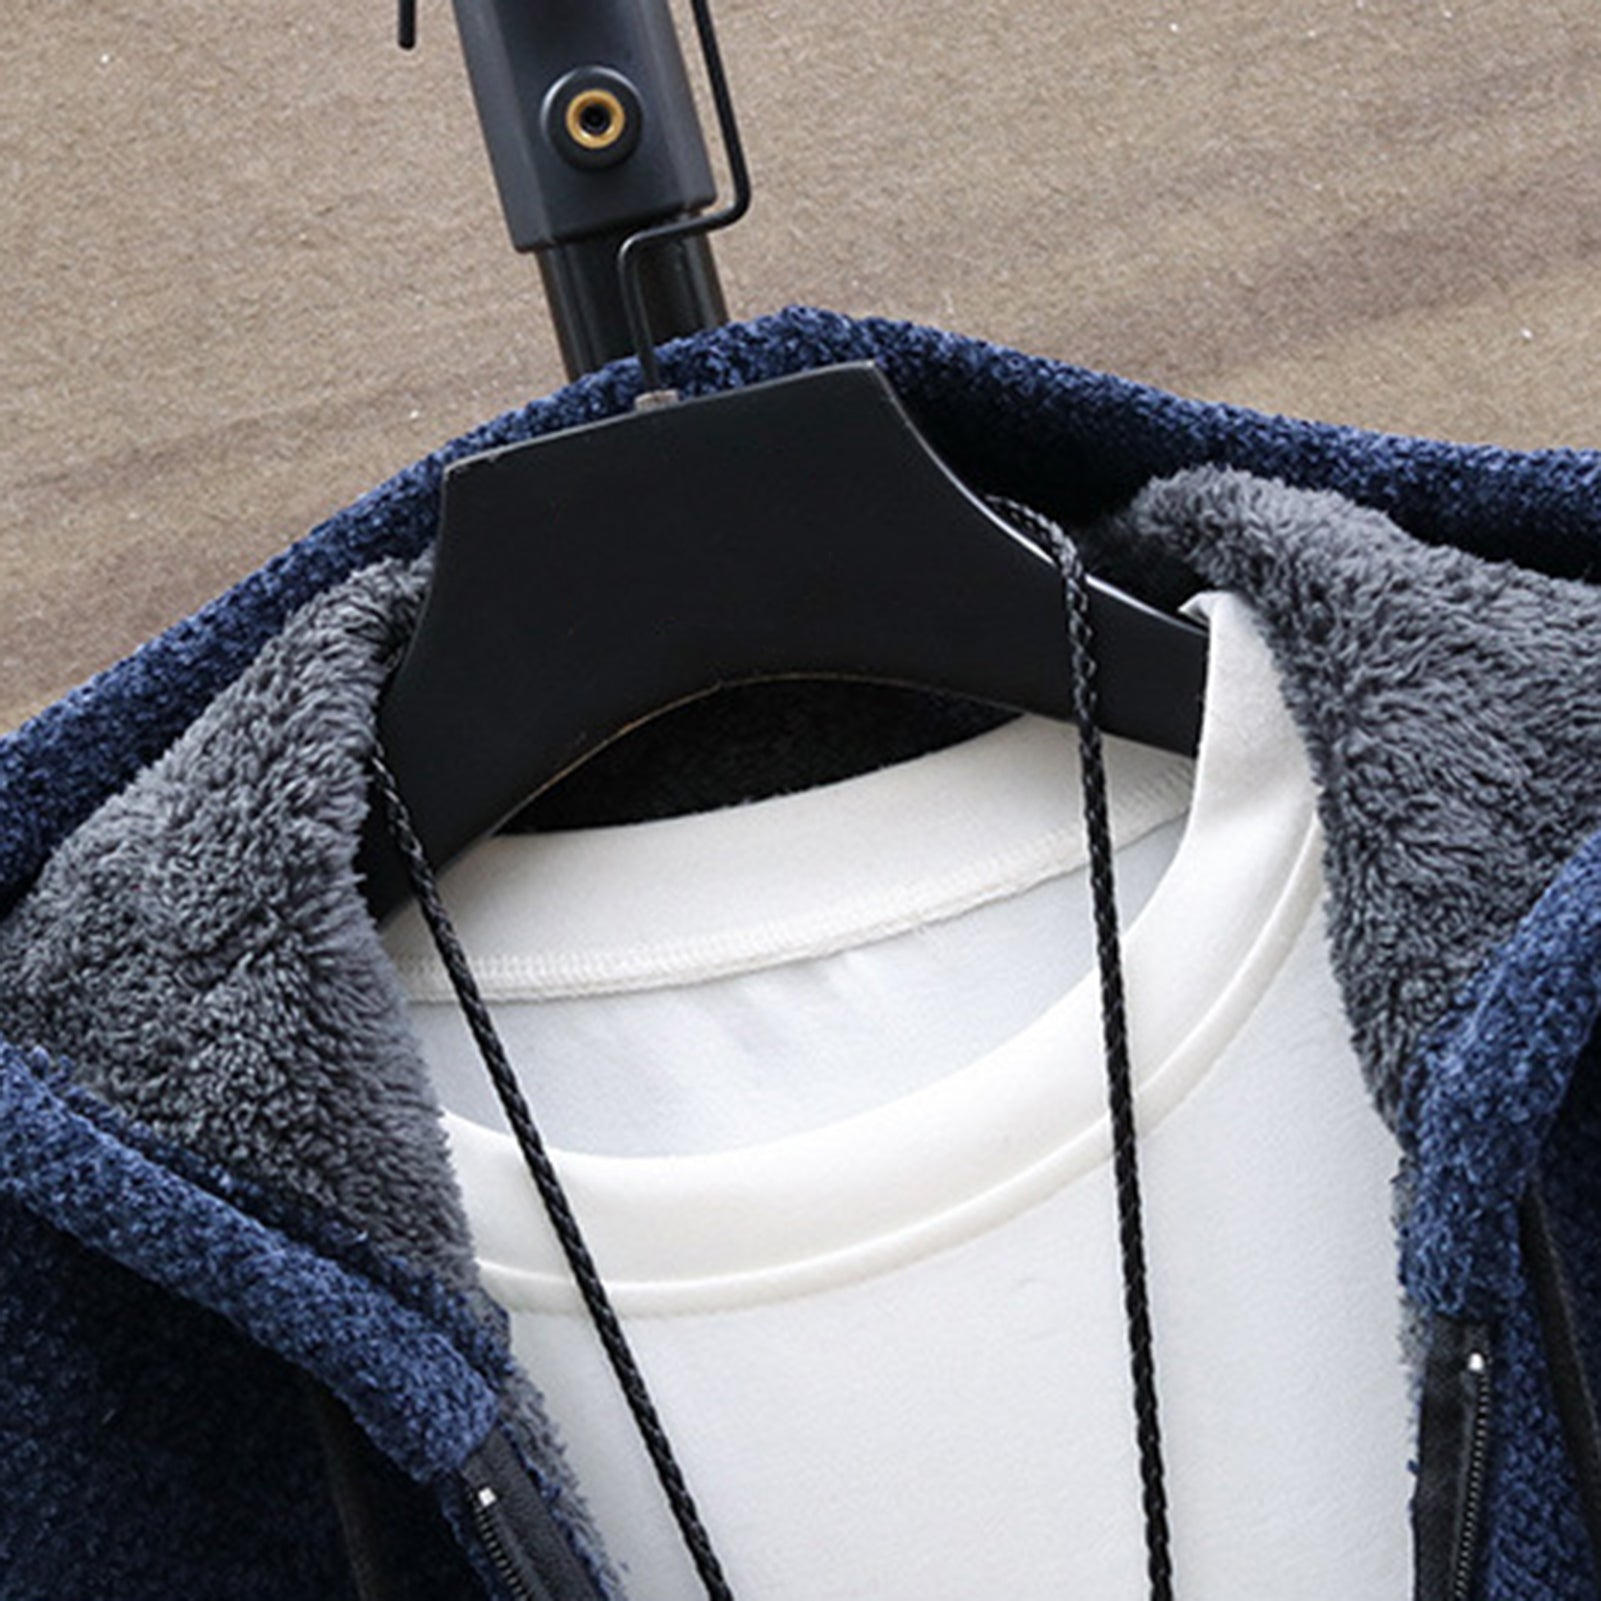 Cardigan con forro y capucha para hombres- Plush men's sweater